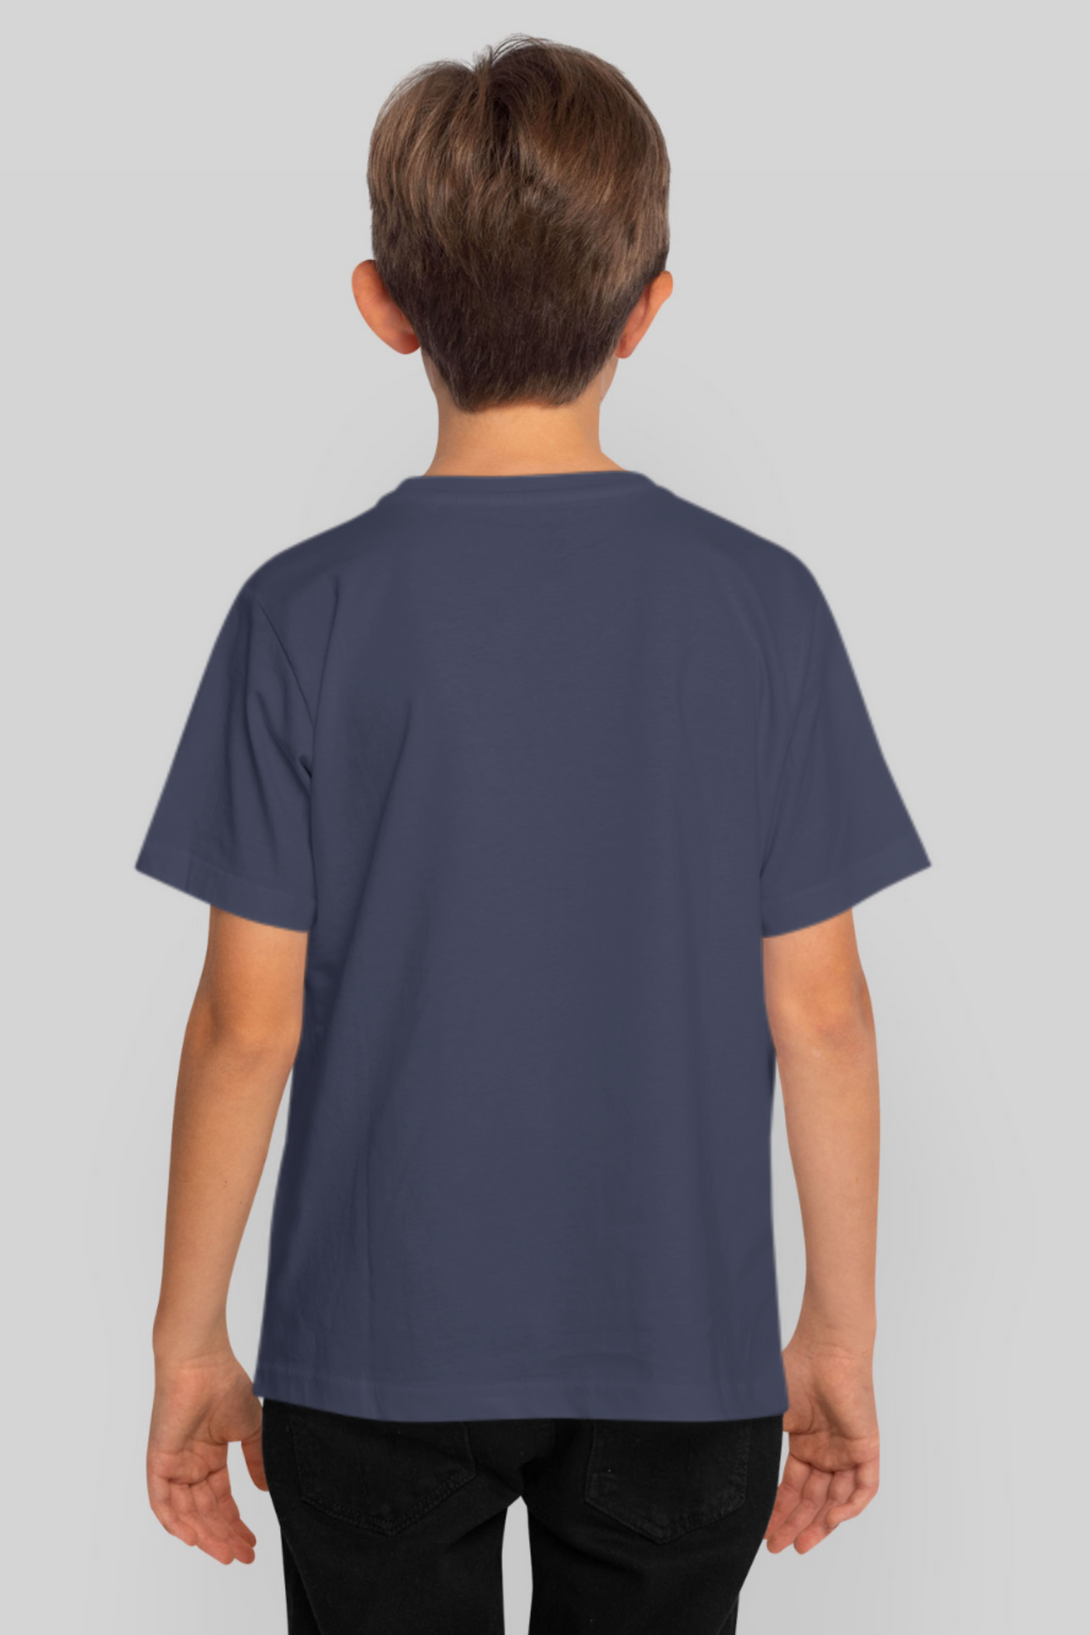 Navy Blue T-Shirt For Boy - WowWaves - 2